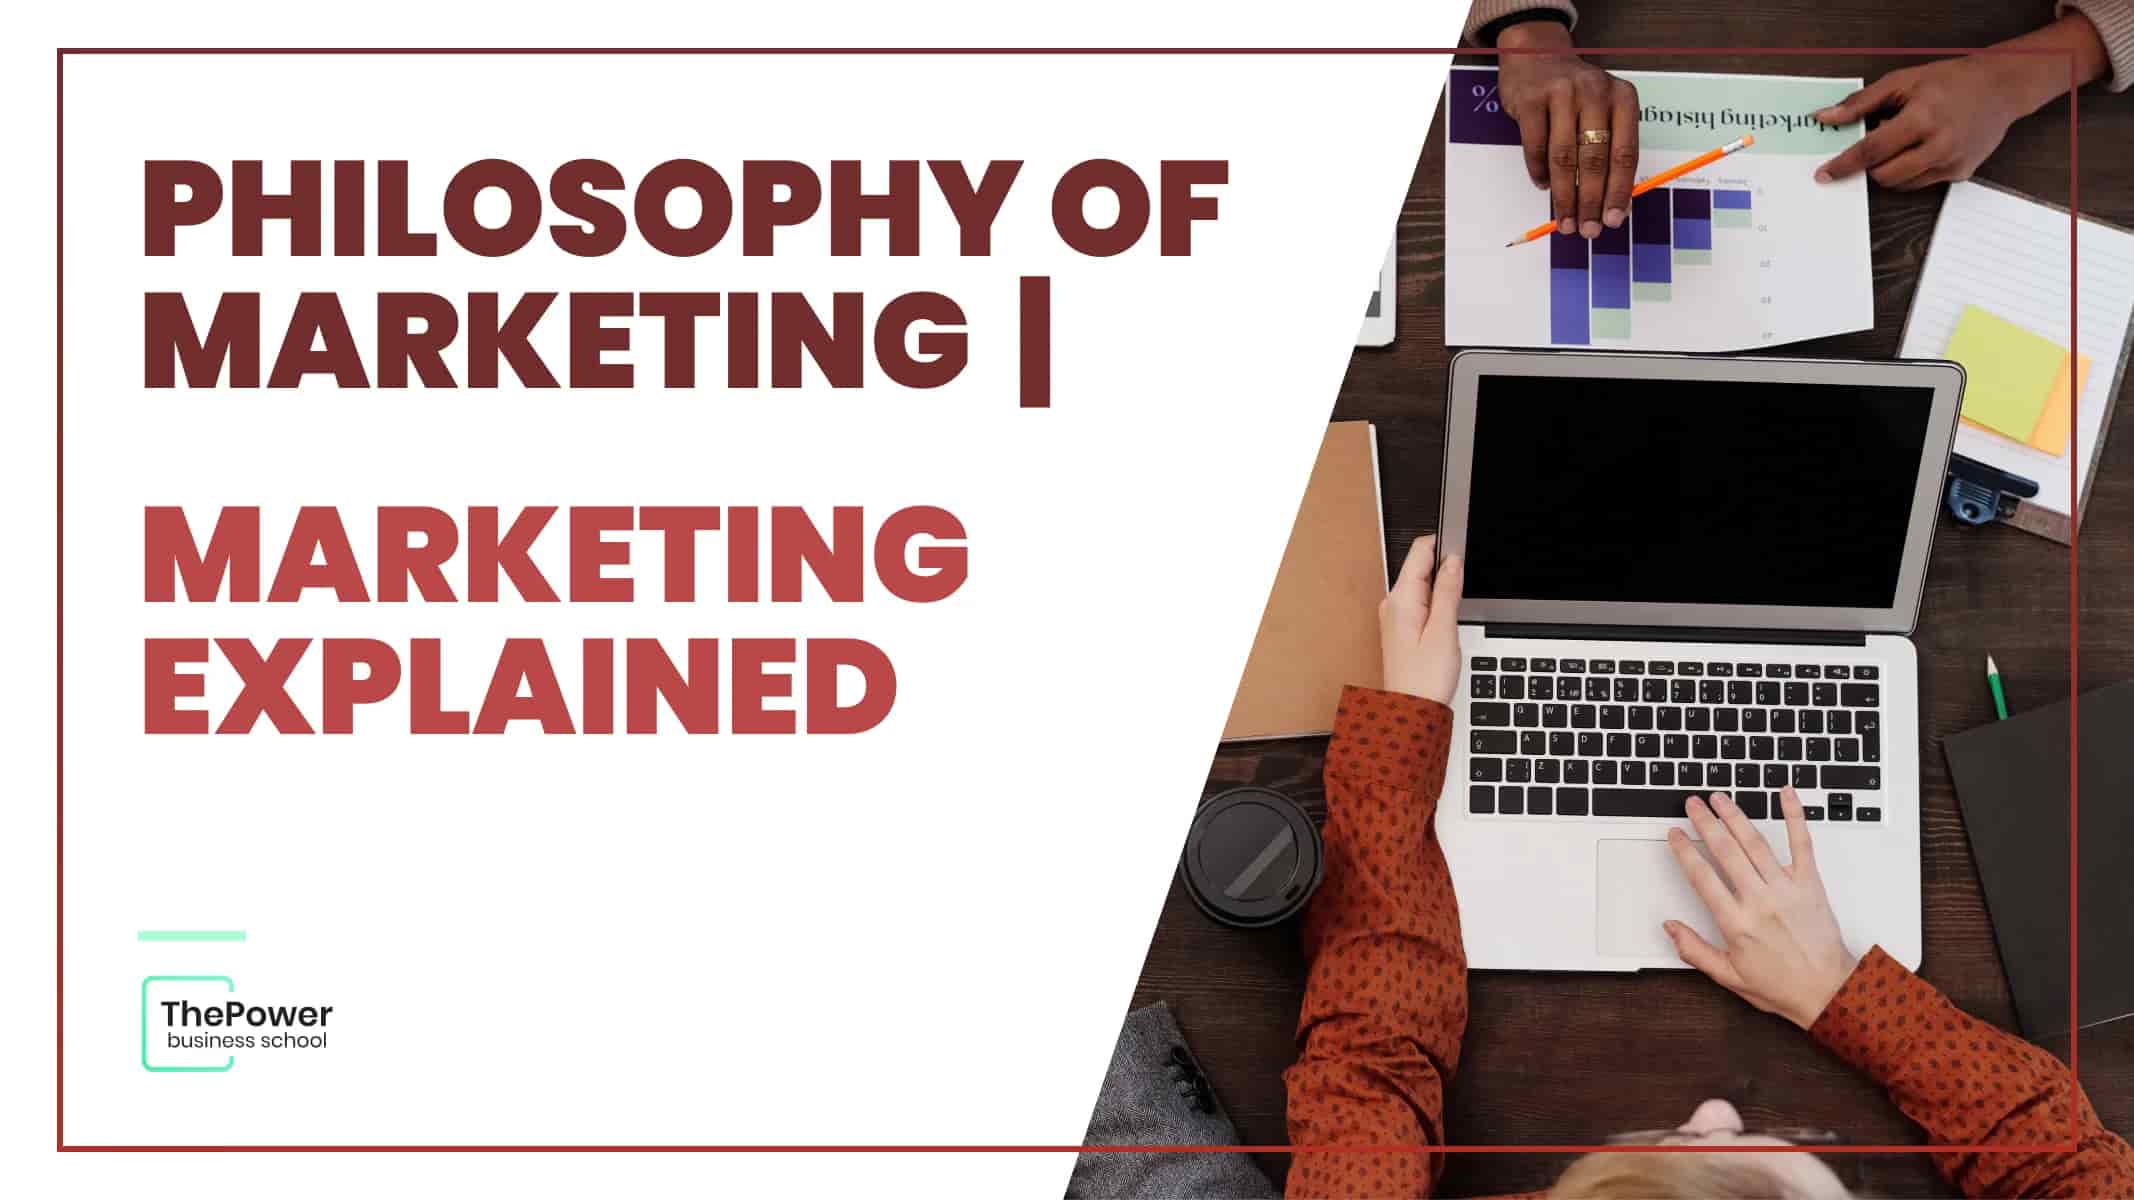 Philosophy of marketing